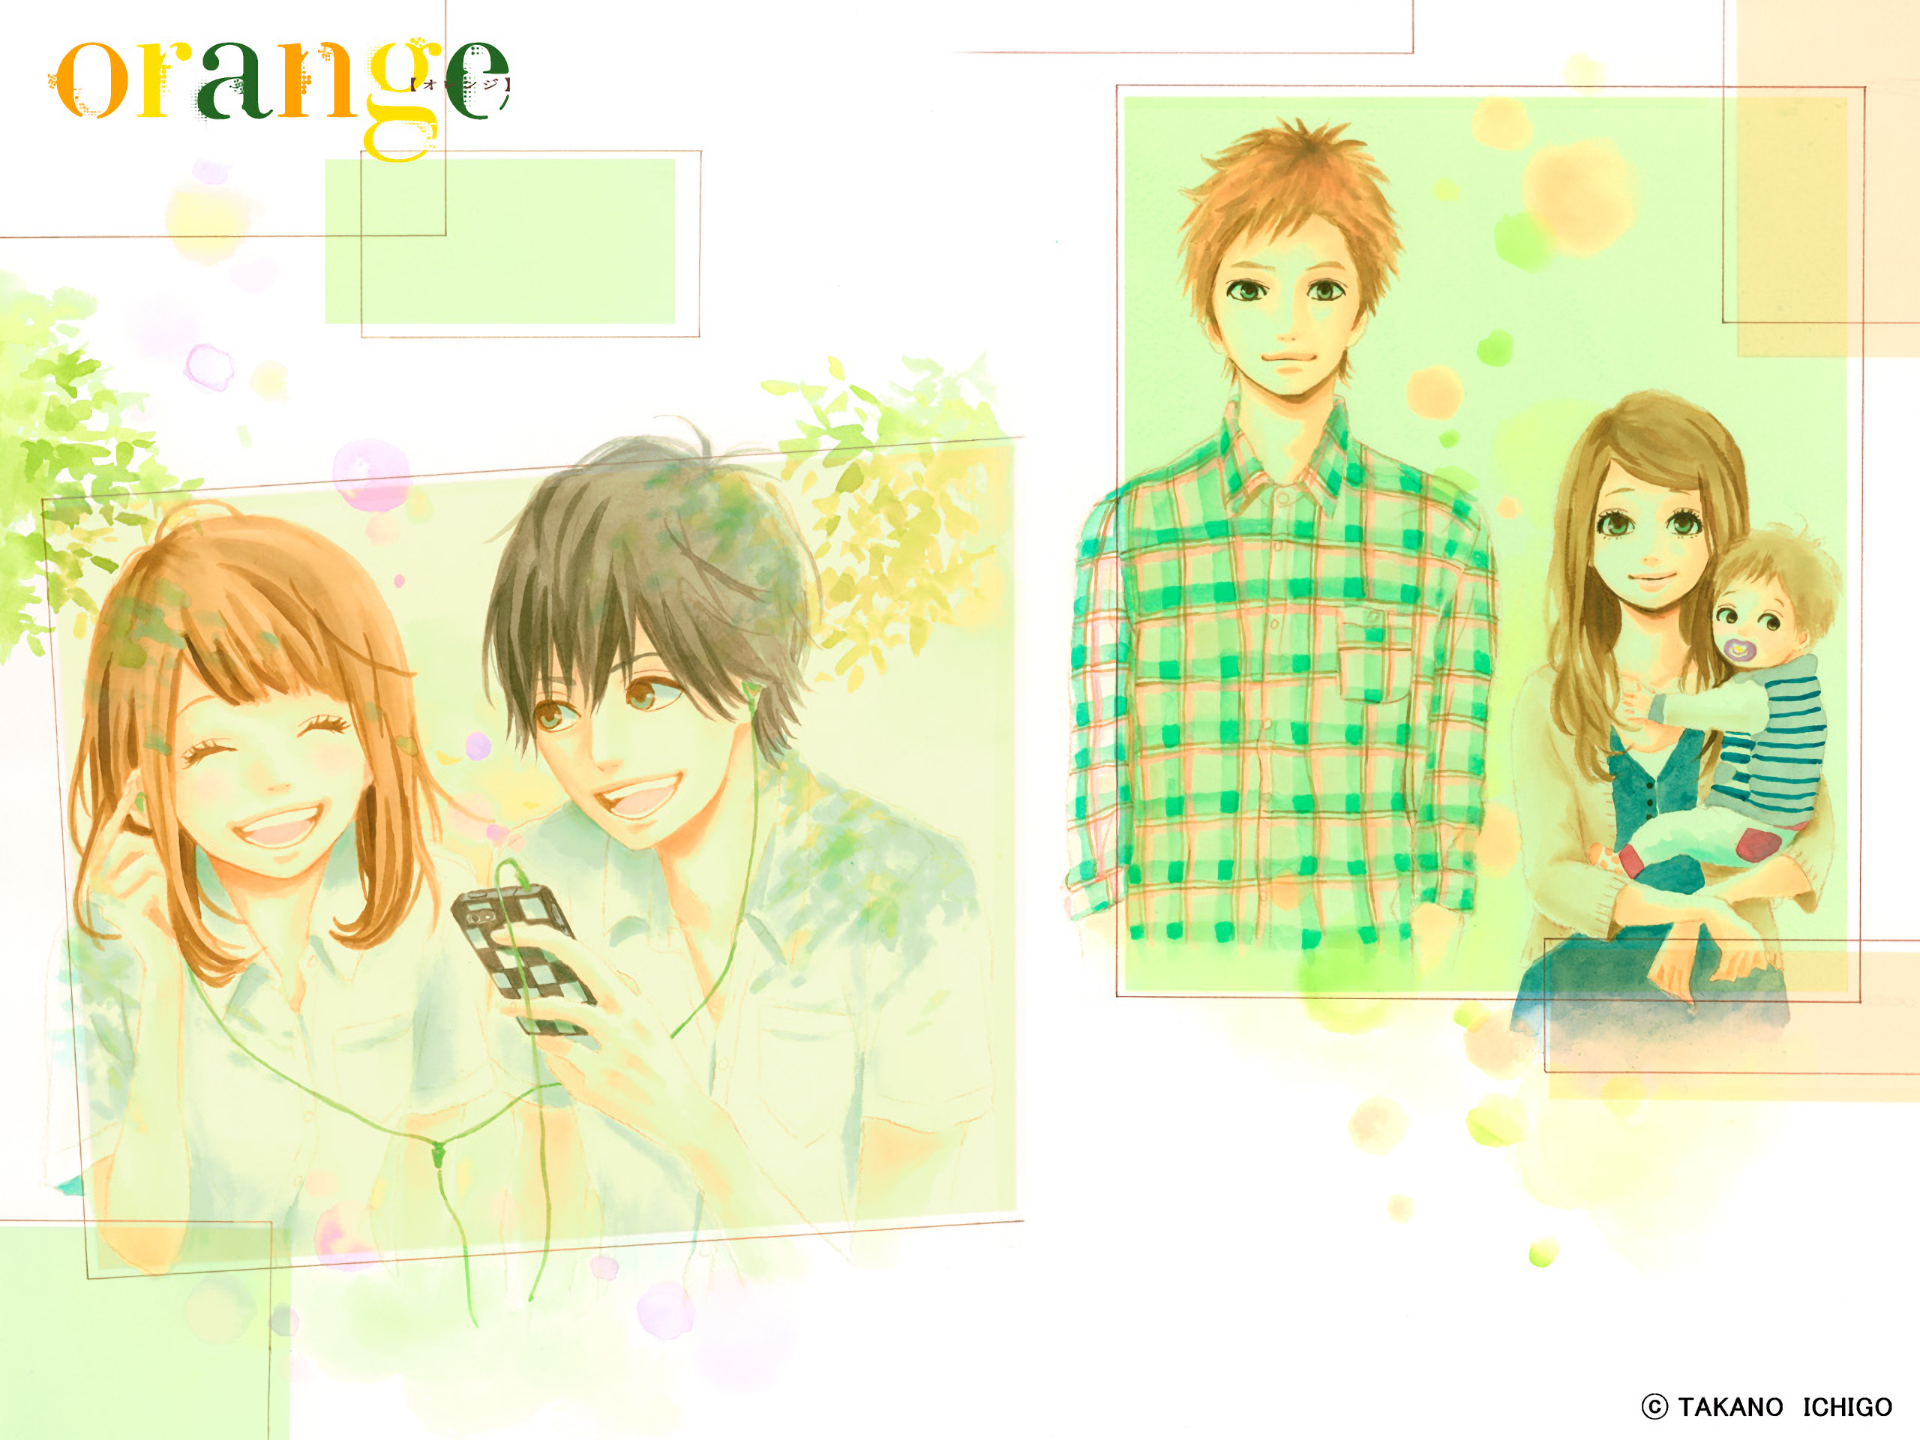 17+] Orange Anime Wallpapers - WallpaperSafari